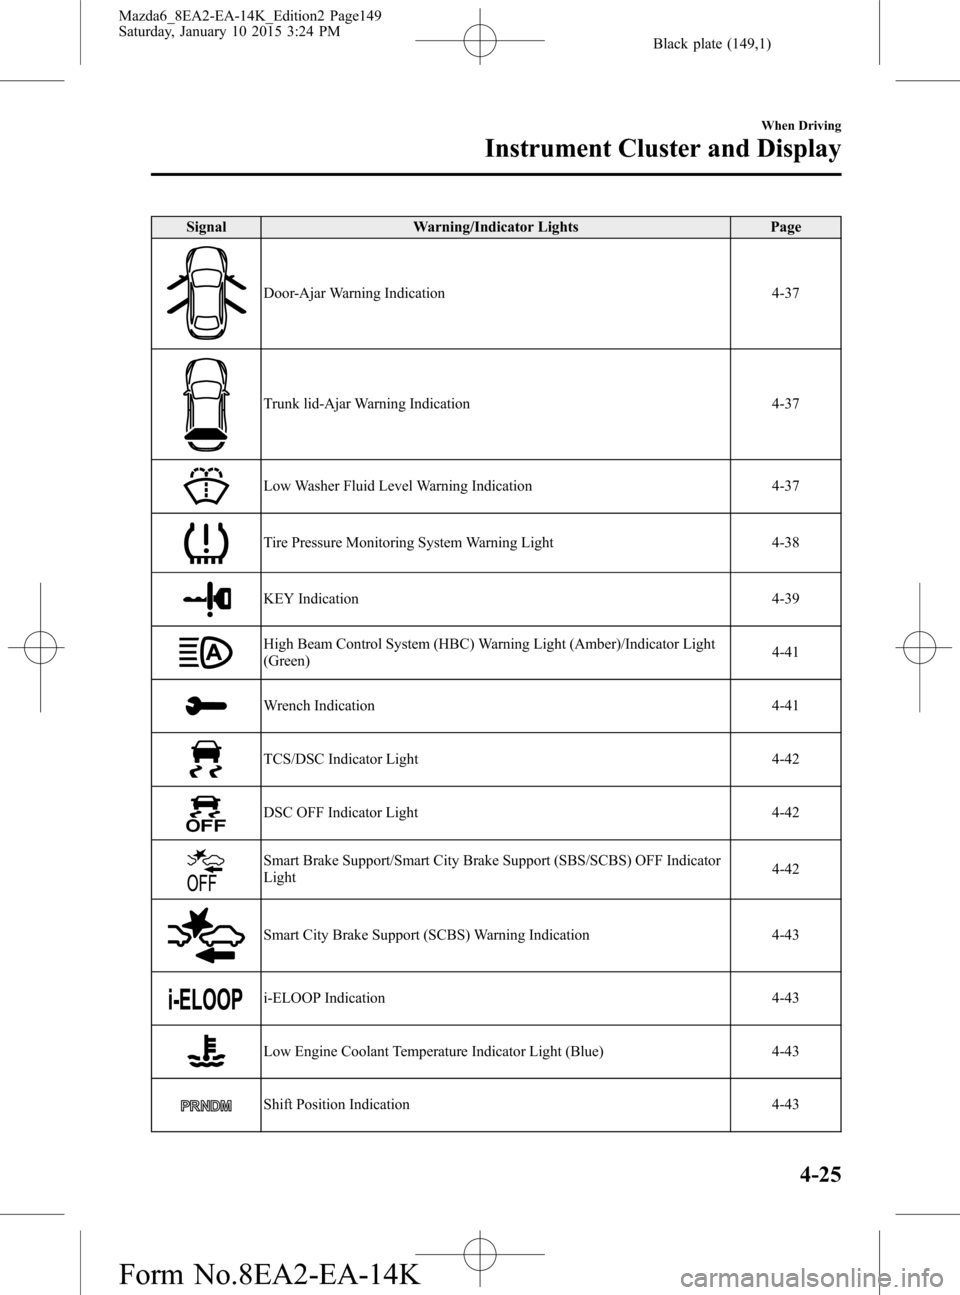 MAZDA MODEL 6 2016  Owners Manual (in English) Black plate (149,1)
Signal Warning/Indicator Lights Page
Door-Ajar Warning Indication 4-37
Trunk lid-Ajar Warning Indication 4-37
Low Washer Fluid Level Warning Indication 4-37
Tire Pressure Monitorin